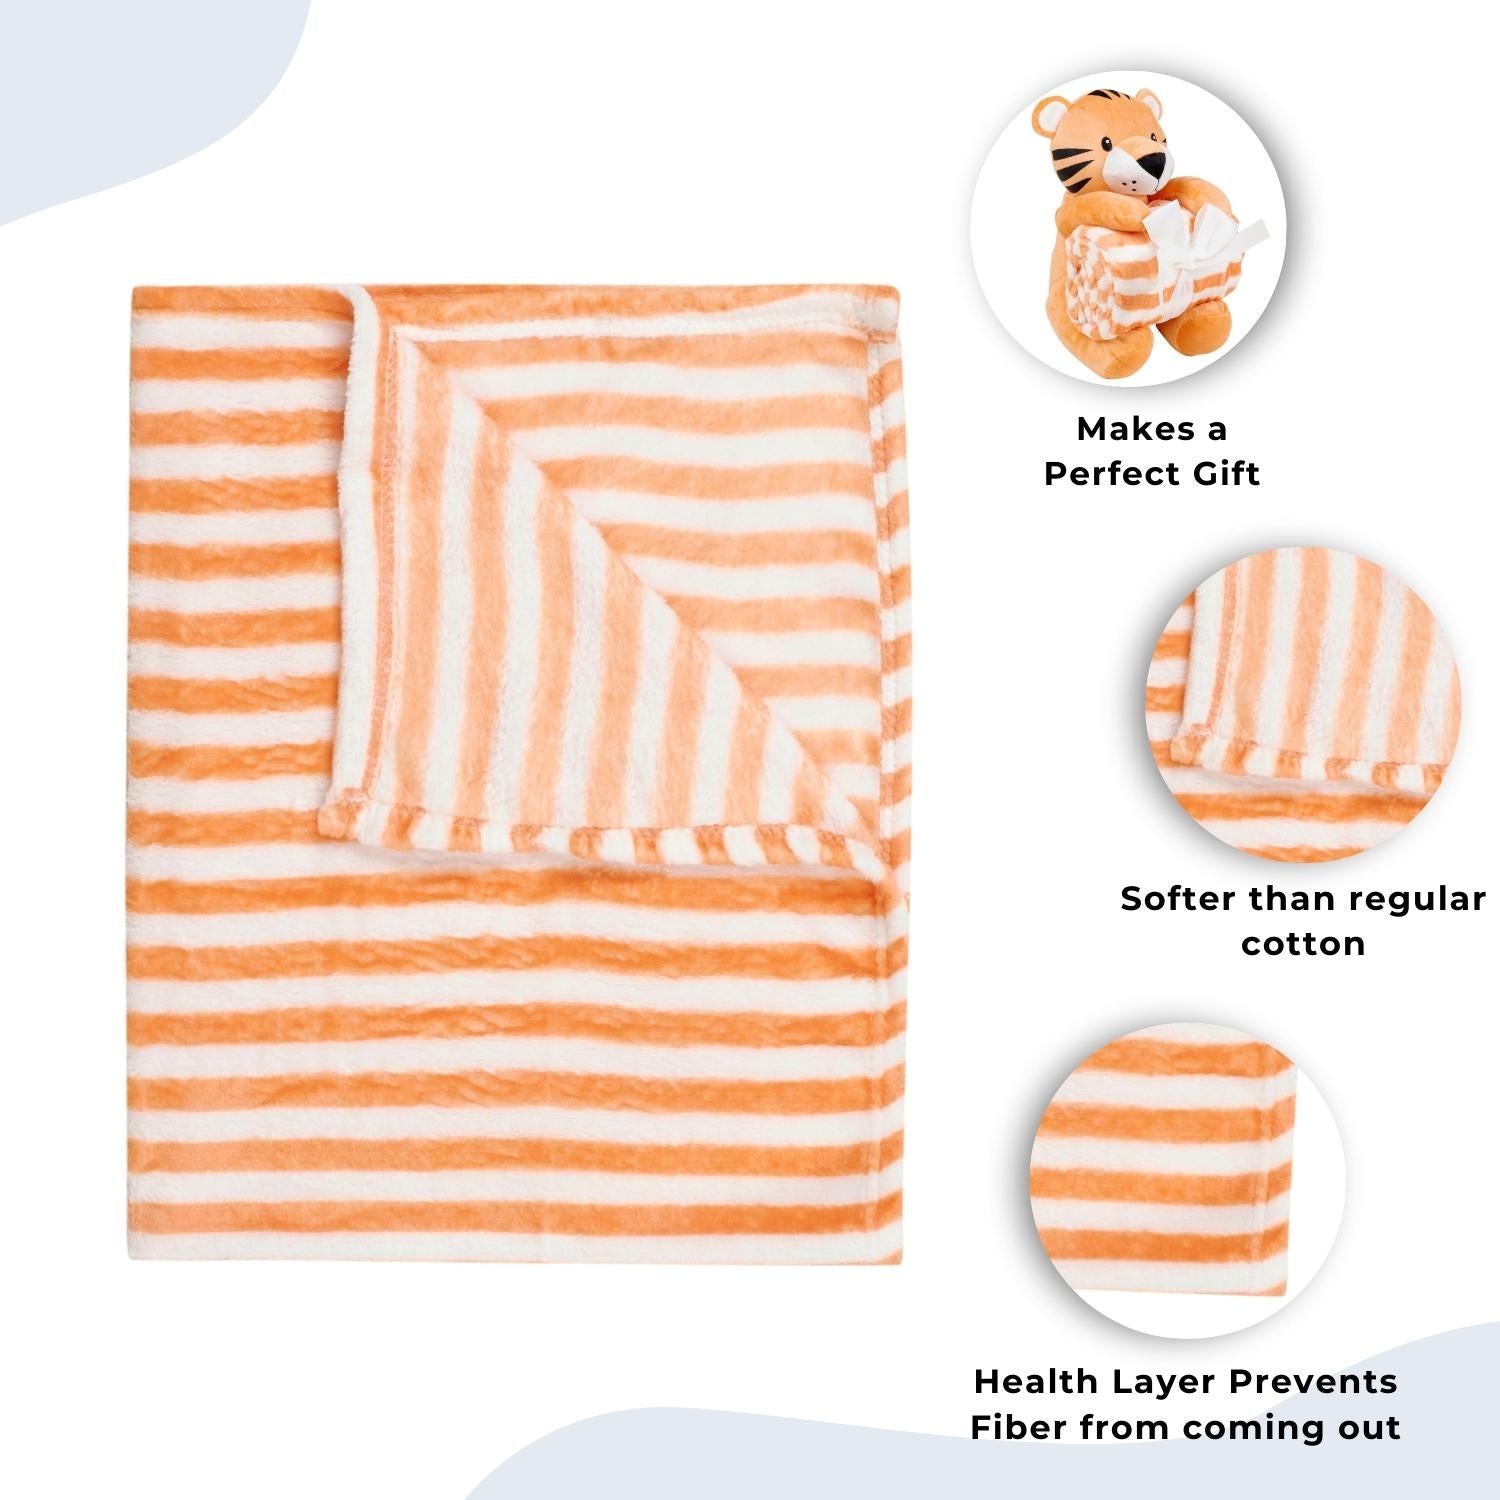 Baby Moo Tiger Snuggle Buddy Soft Rattle and Plush Blanket Gift Toy Blanket - Orange